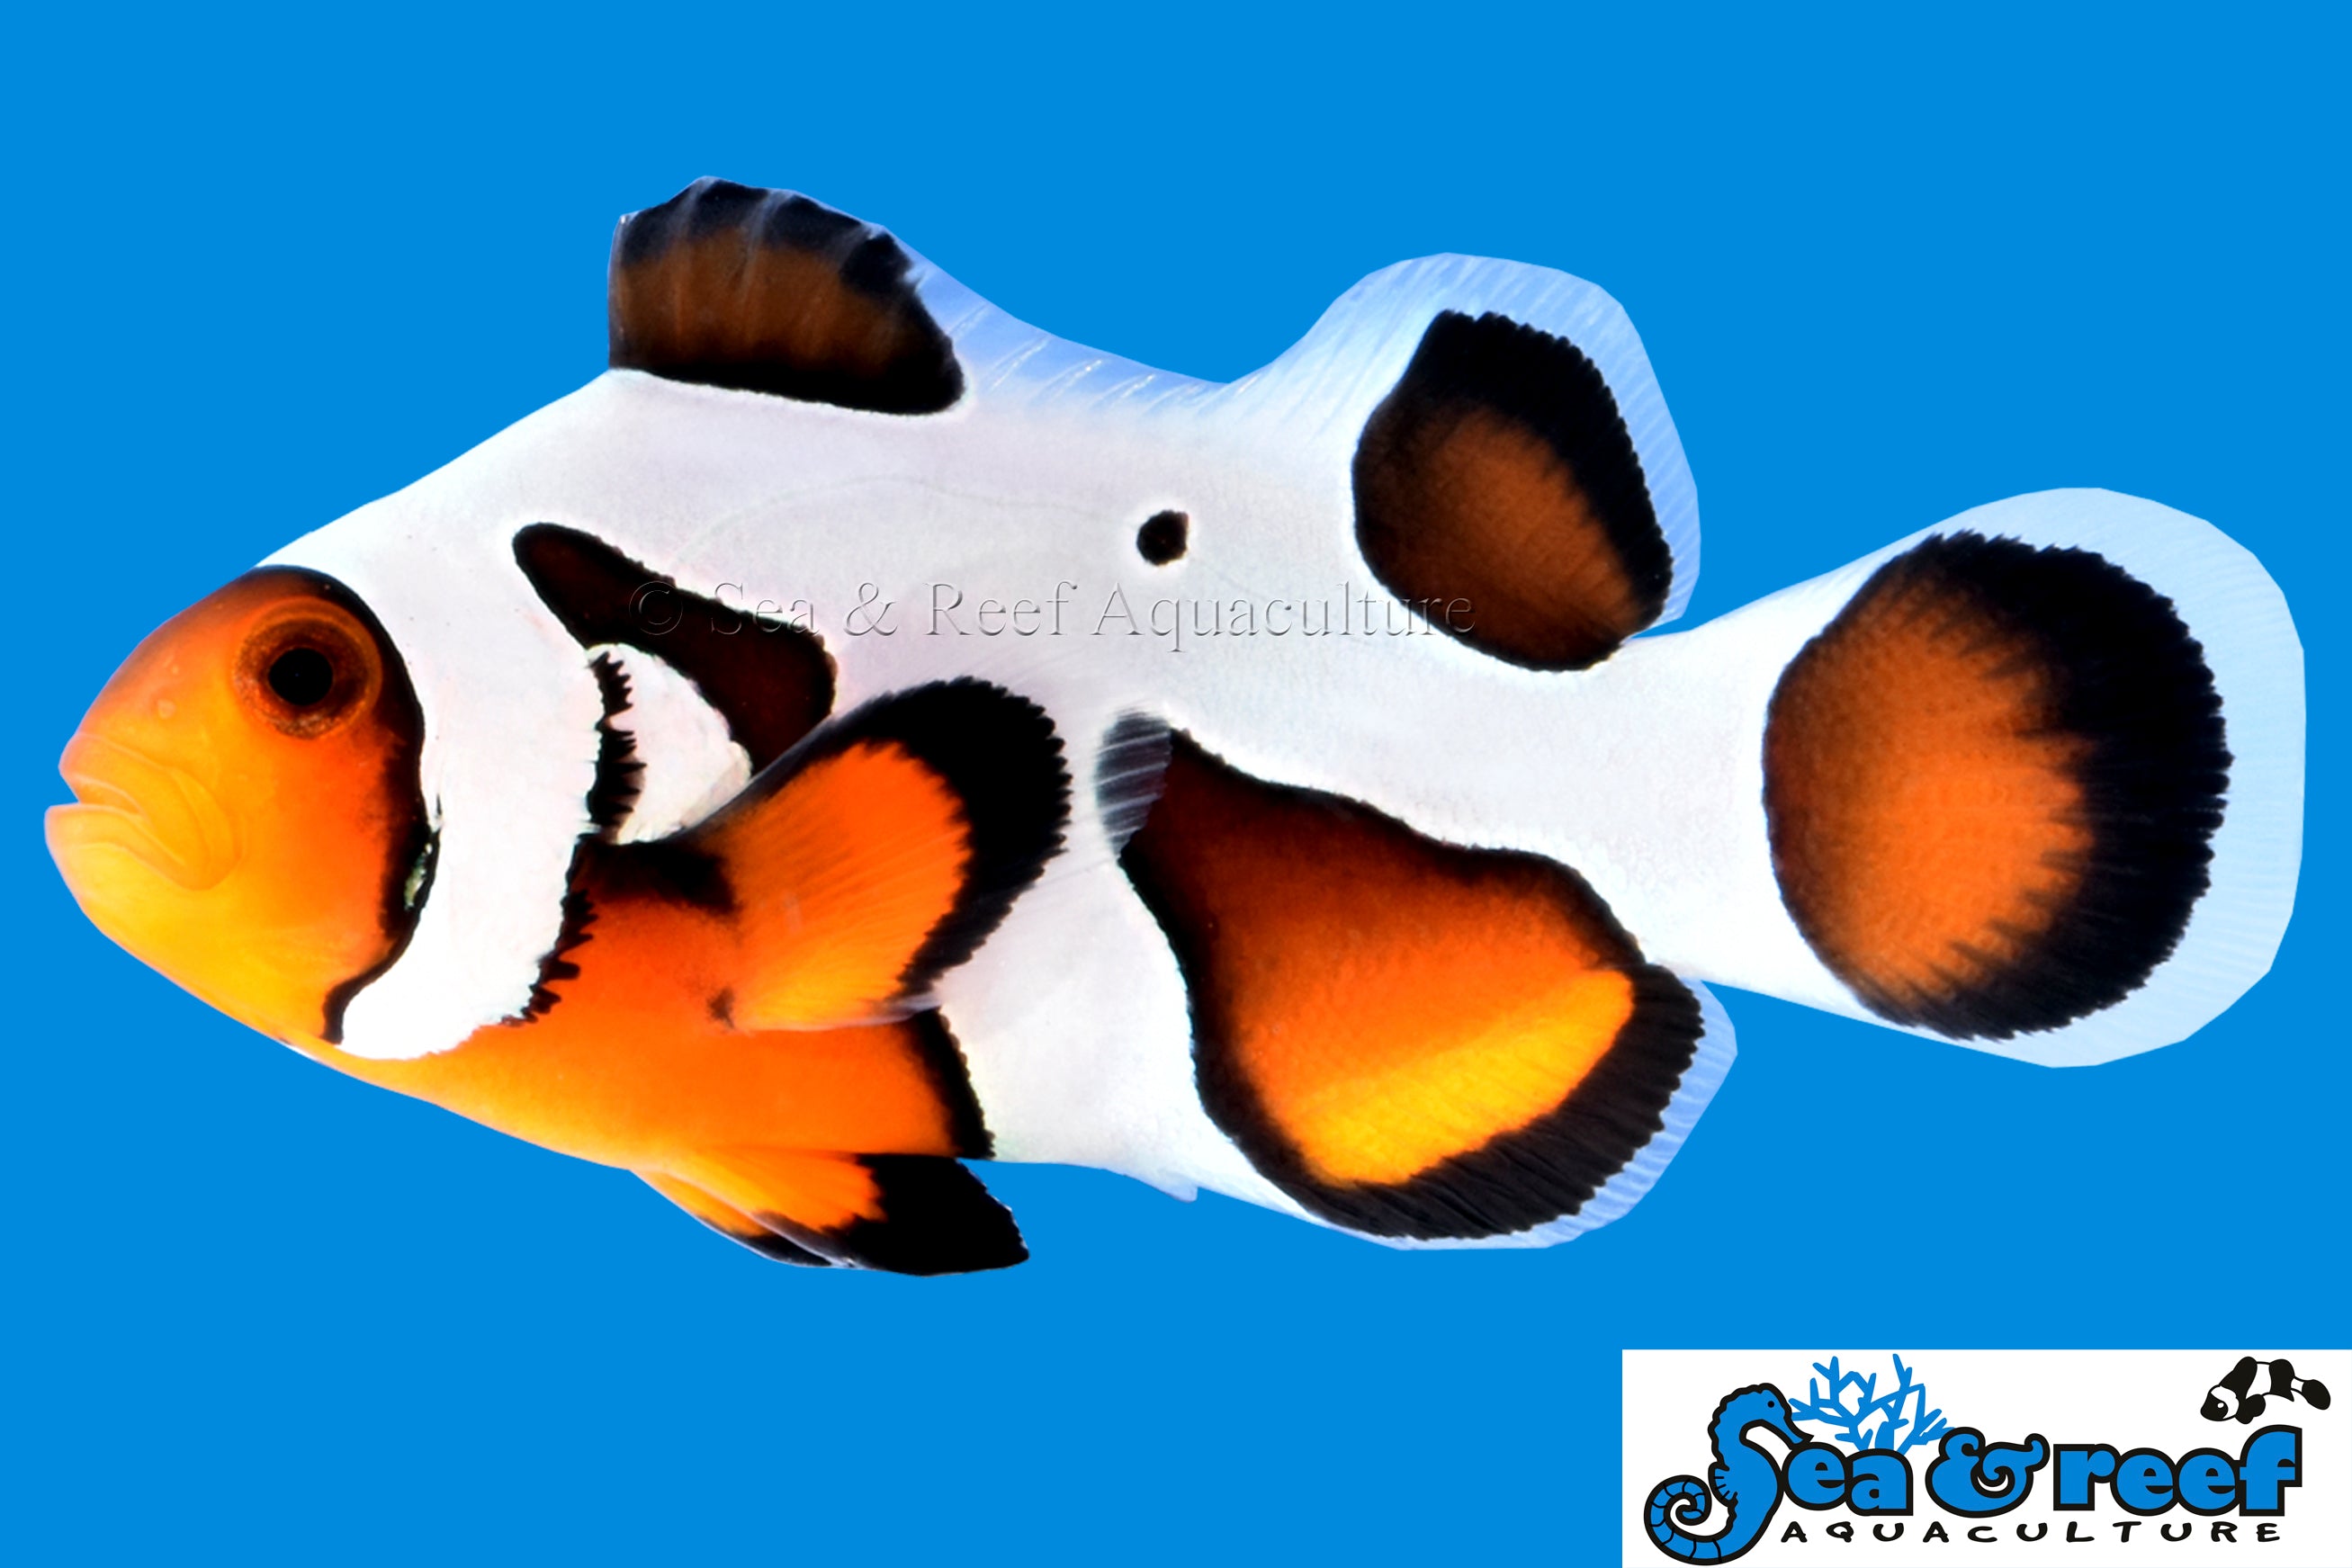 Detail photo for MochaVinci Extreme Clownfish